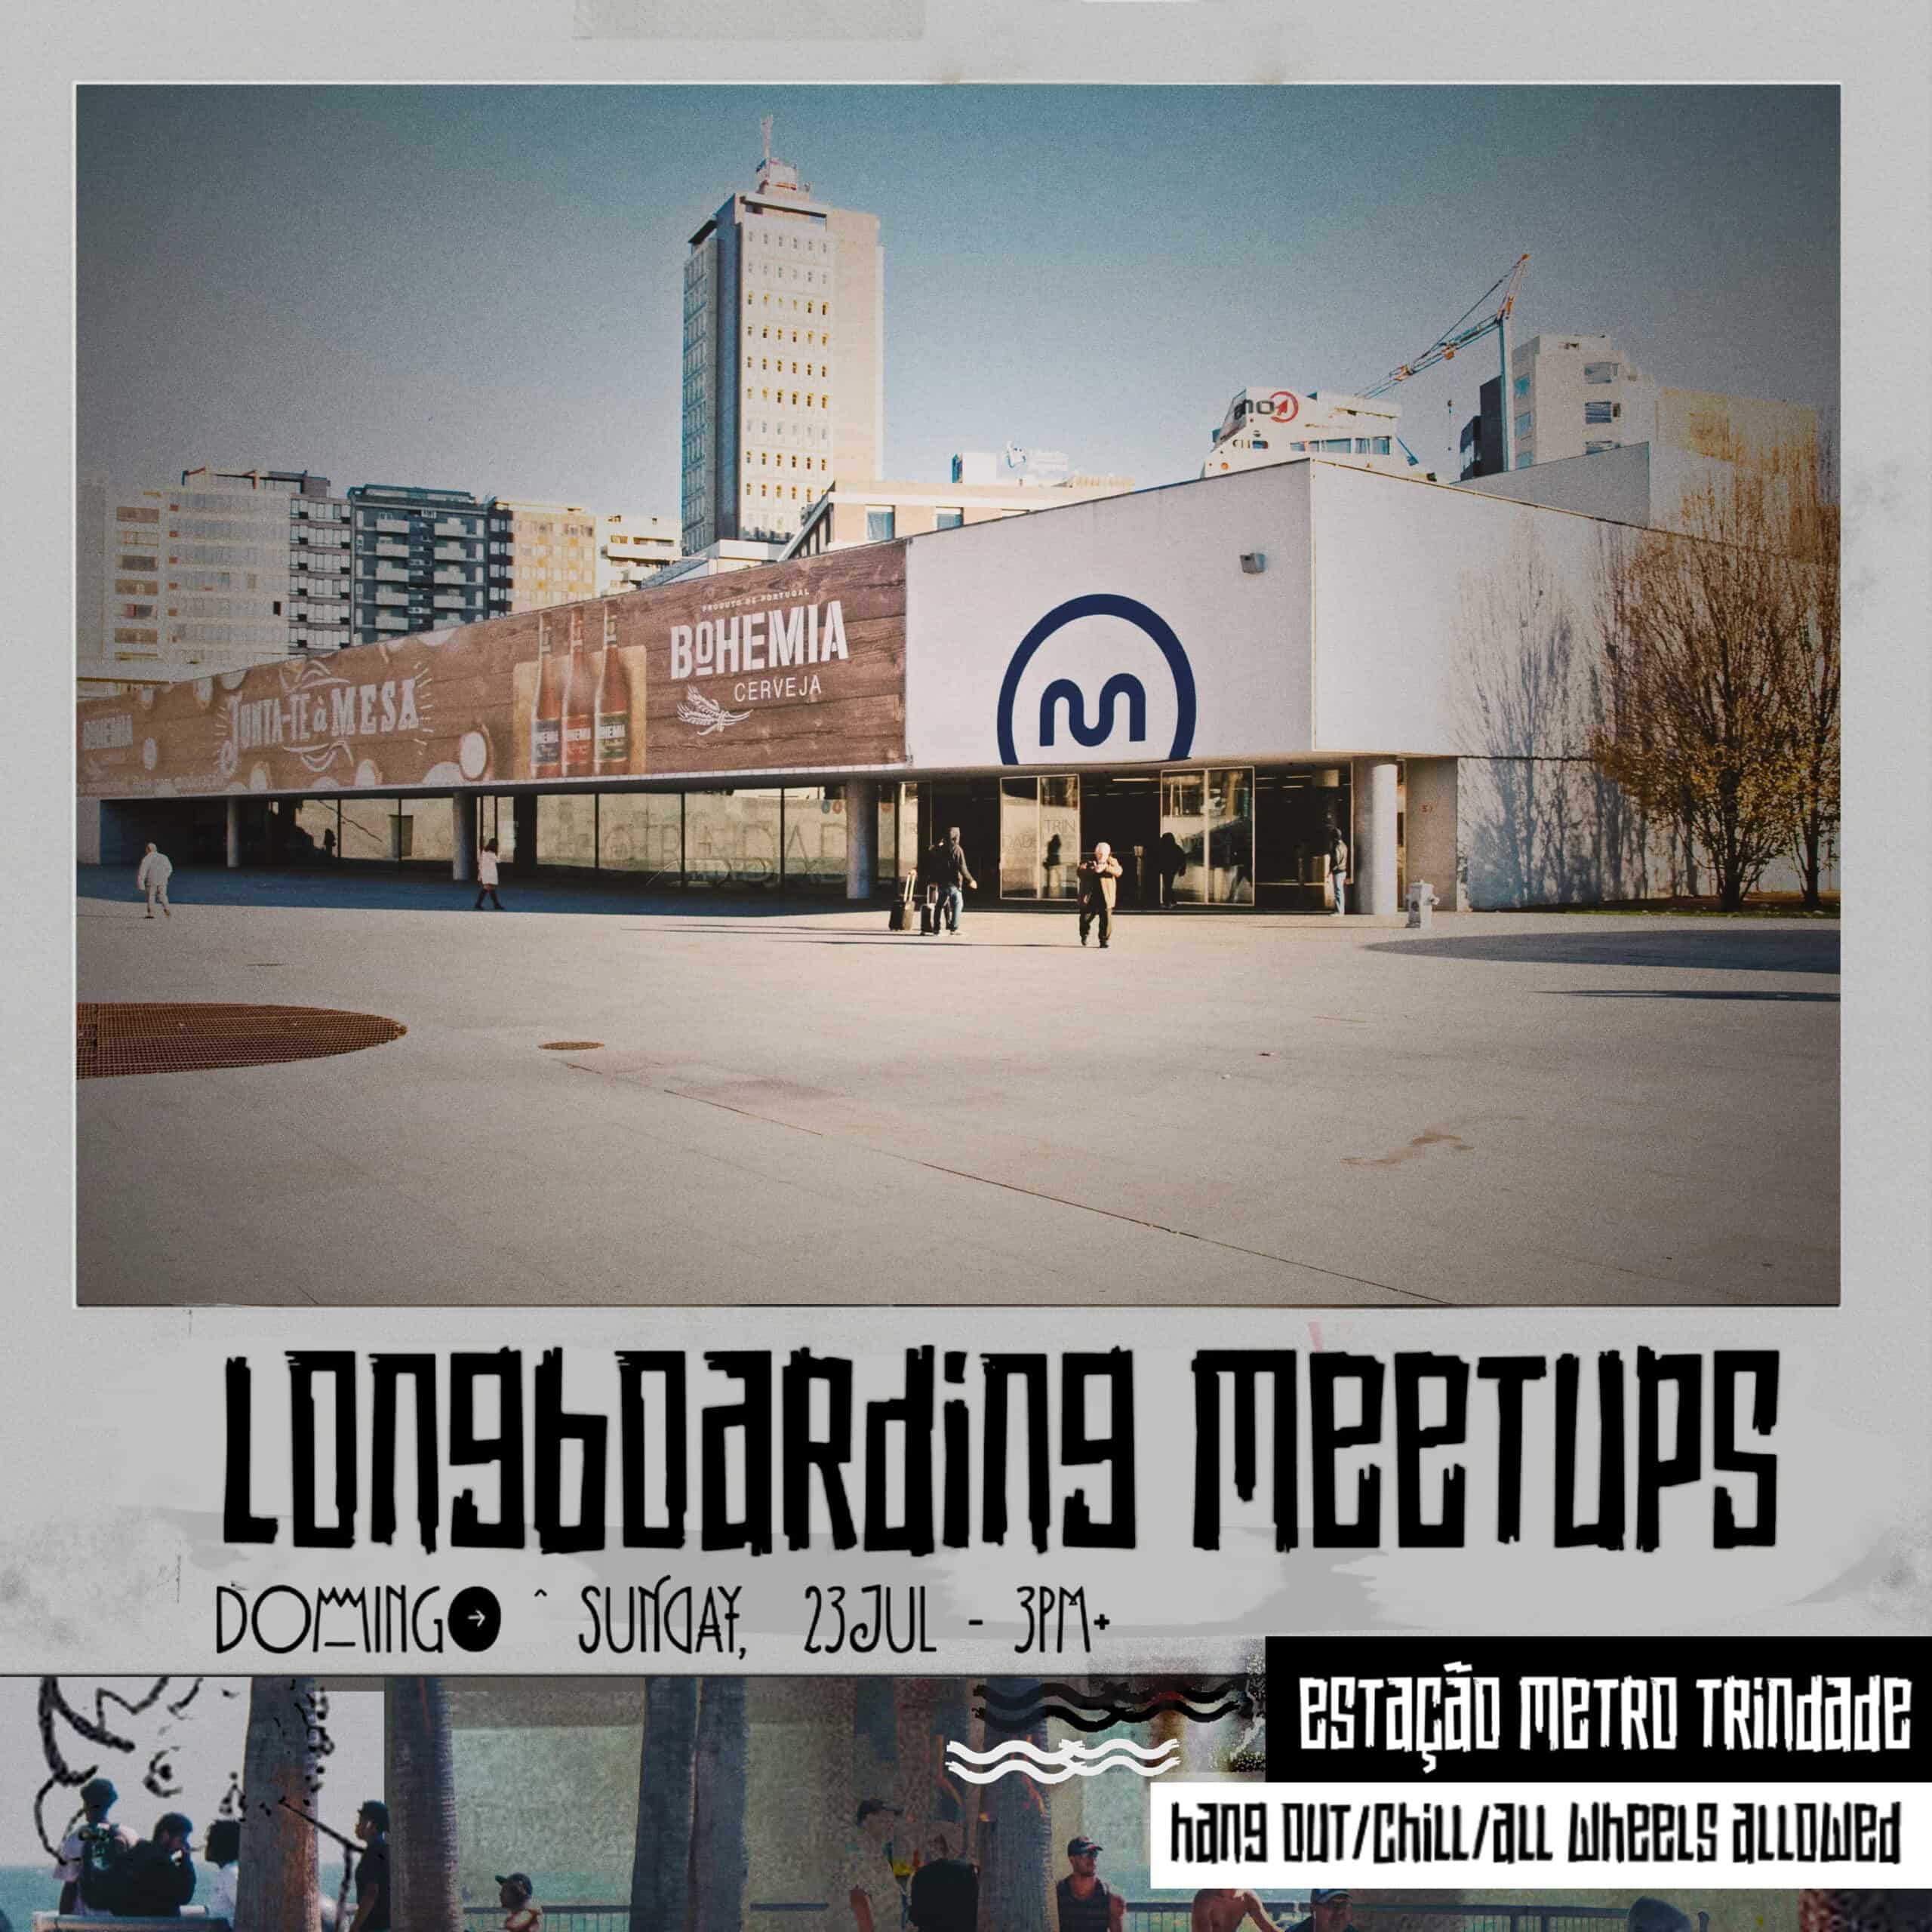 Longboard Skate Meetups - Sunday, 23 Jul